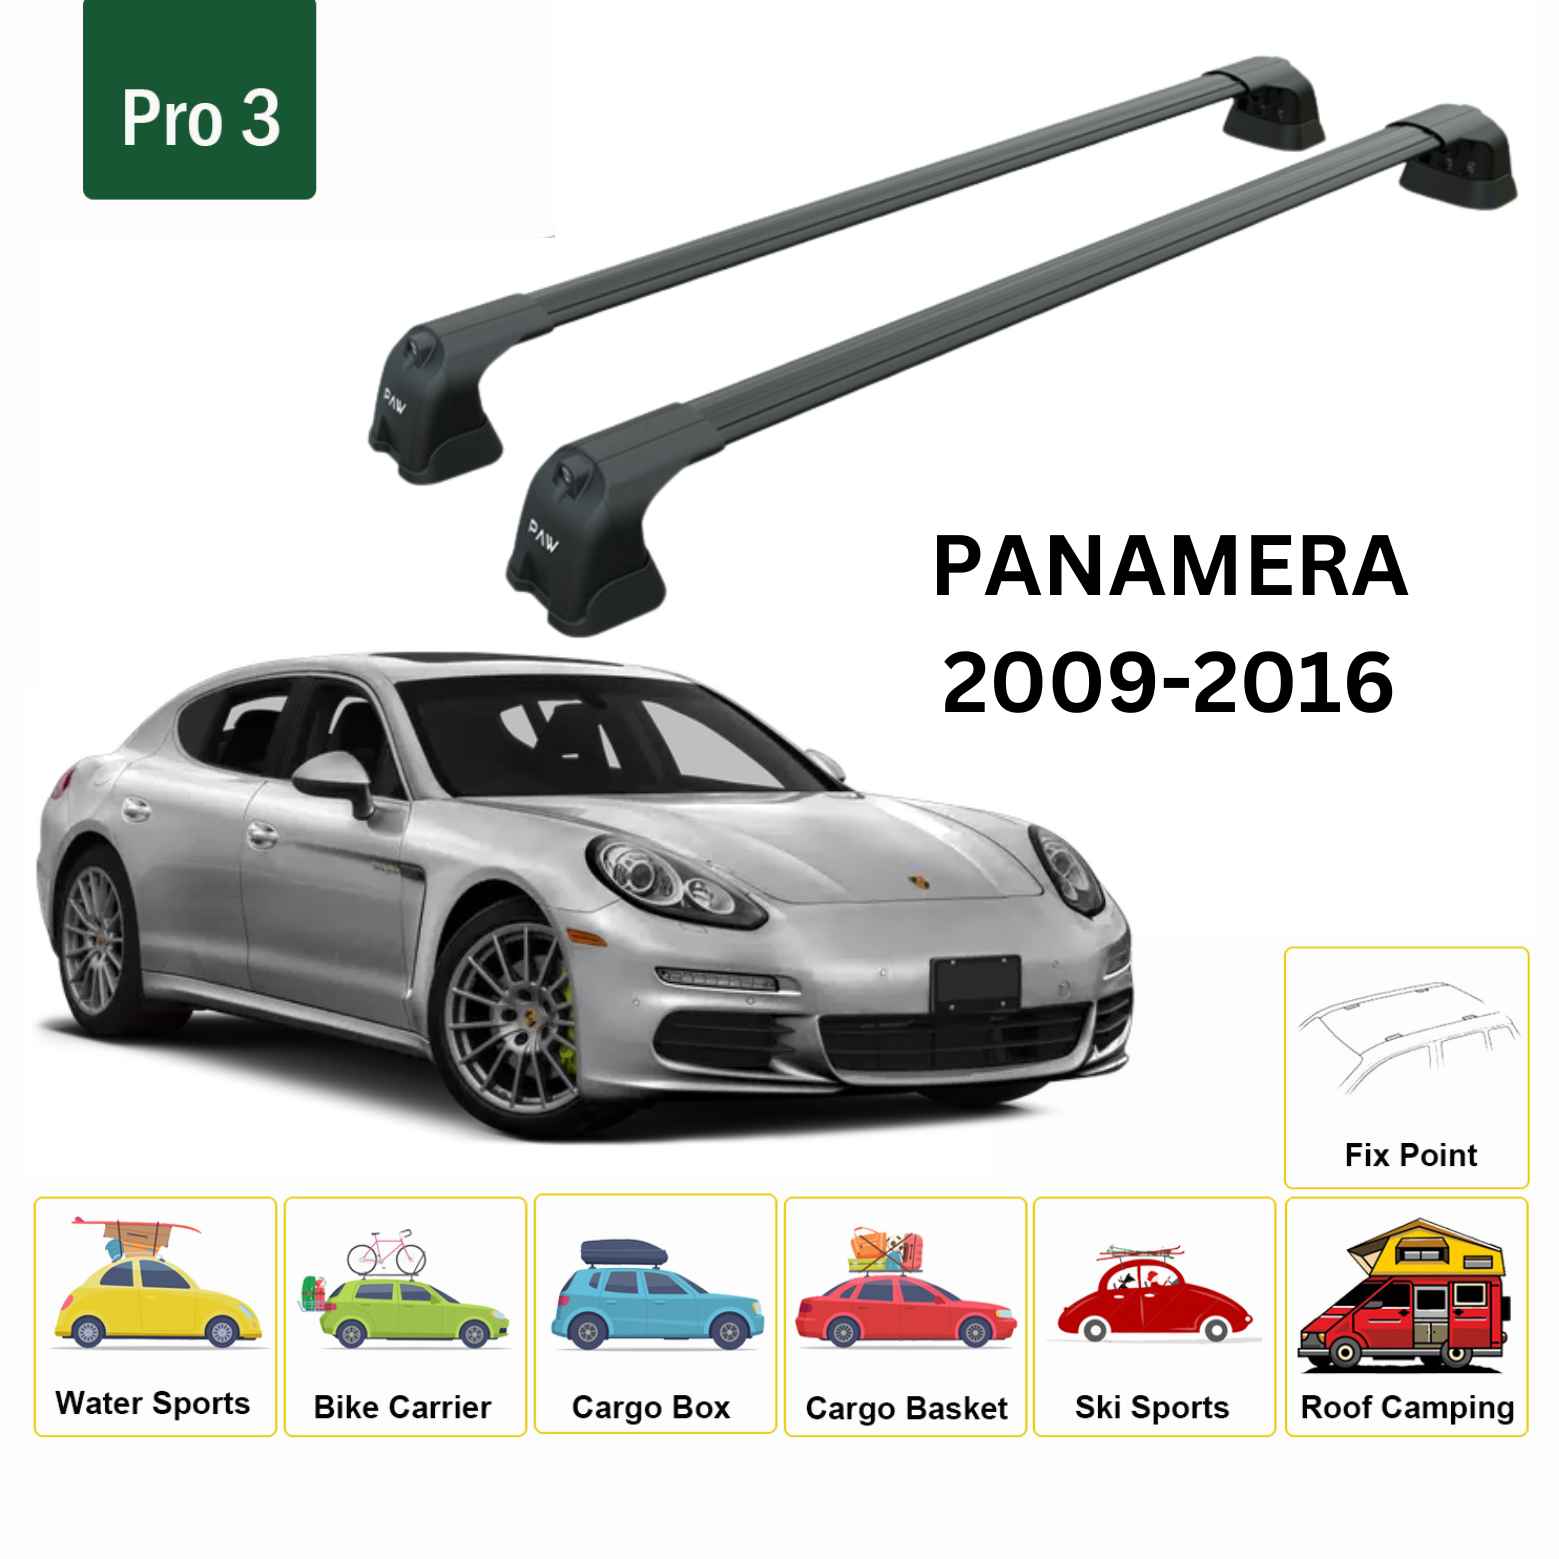 Für Porsche Macan ab Baujahr 2014. Dachträgersystem, Träger-Querstangen, Aluminium, abschließbar, hochwertige Metallhalterung  - 0